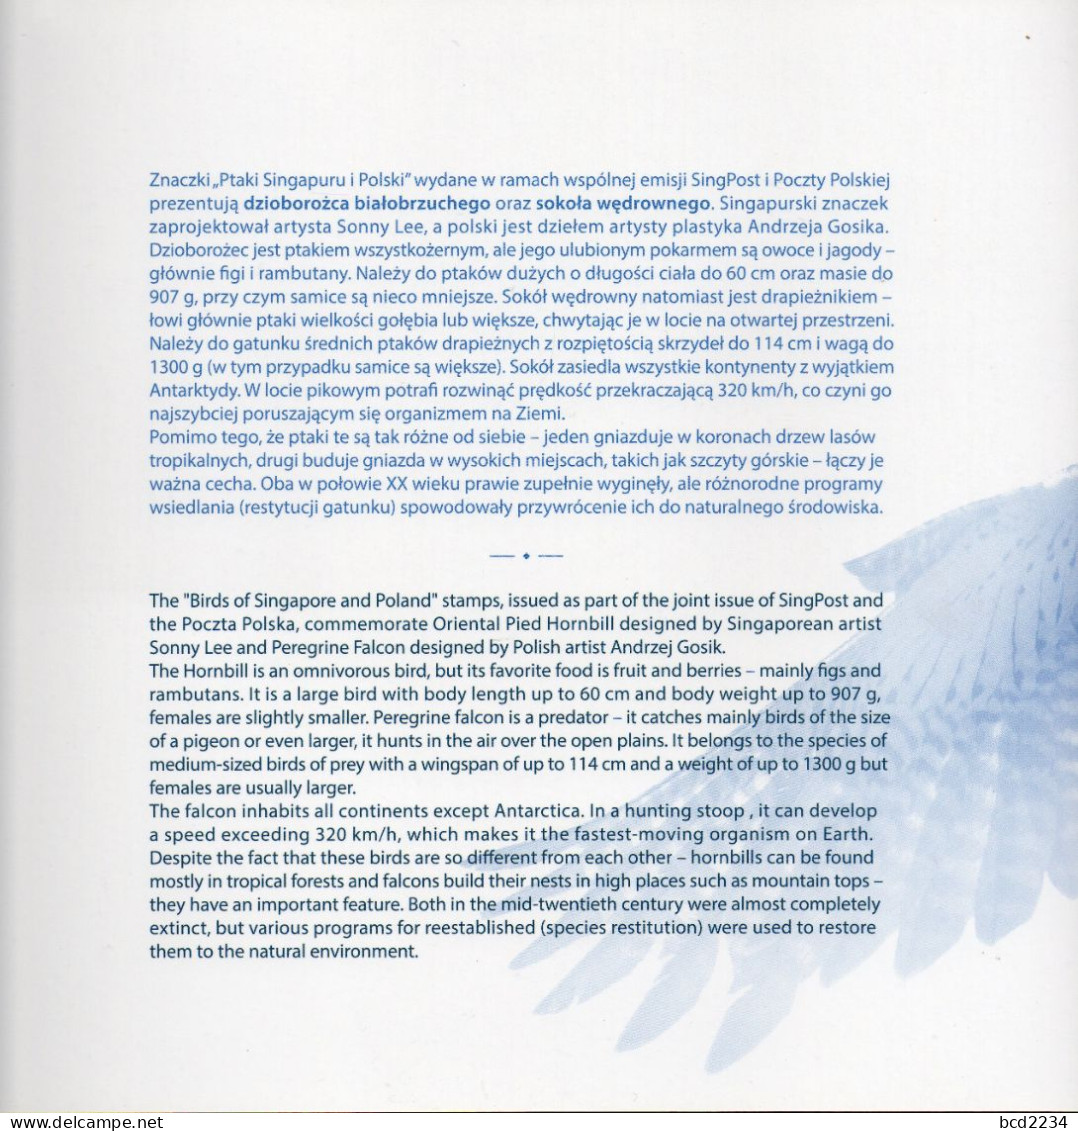 POLAND 2019 POLISH POST OFFICE LIMITED EDITION FOLDER: SINGAPORE POLAND BIRDS JOINT ISSUE MS HORNBILL PEREGRINE FALCON - Cartas & Documentos